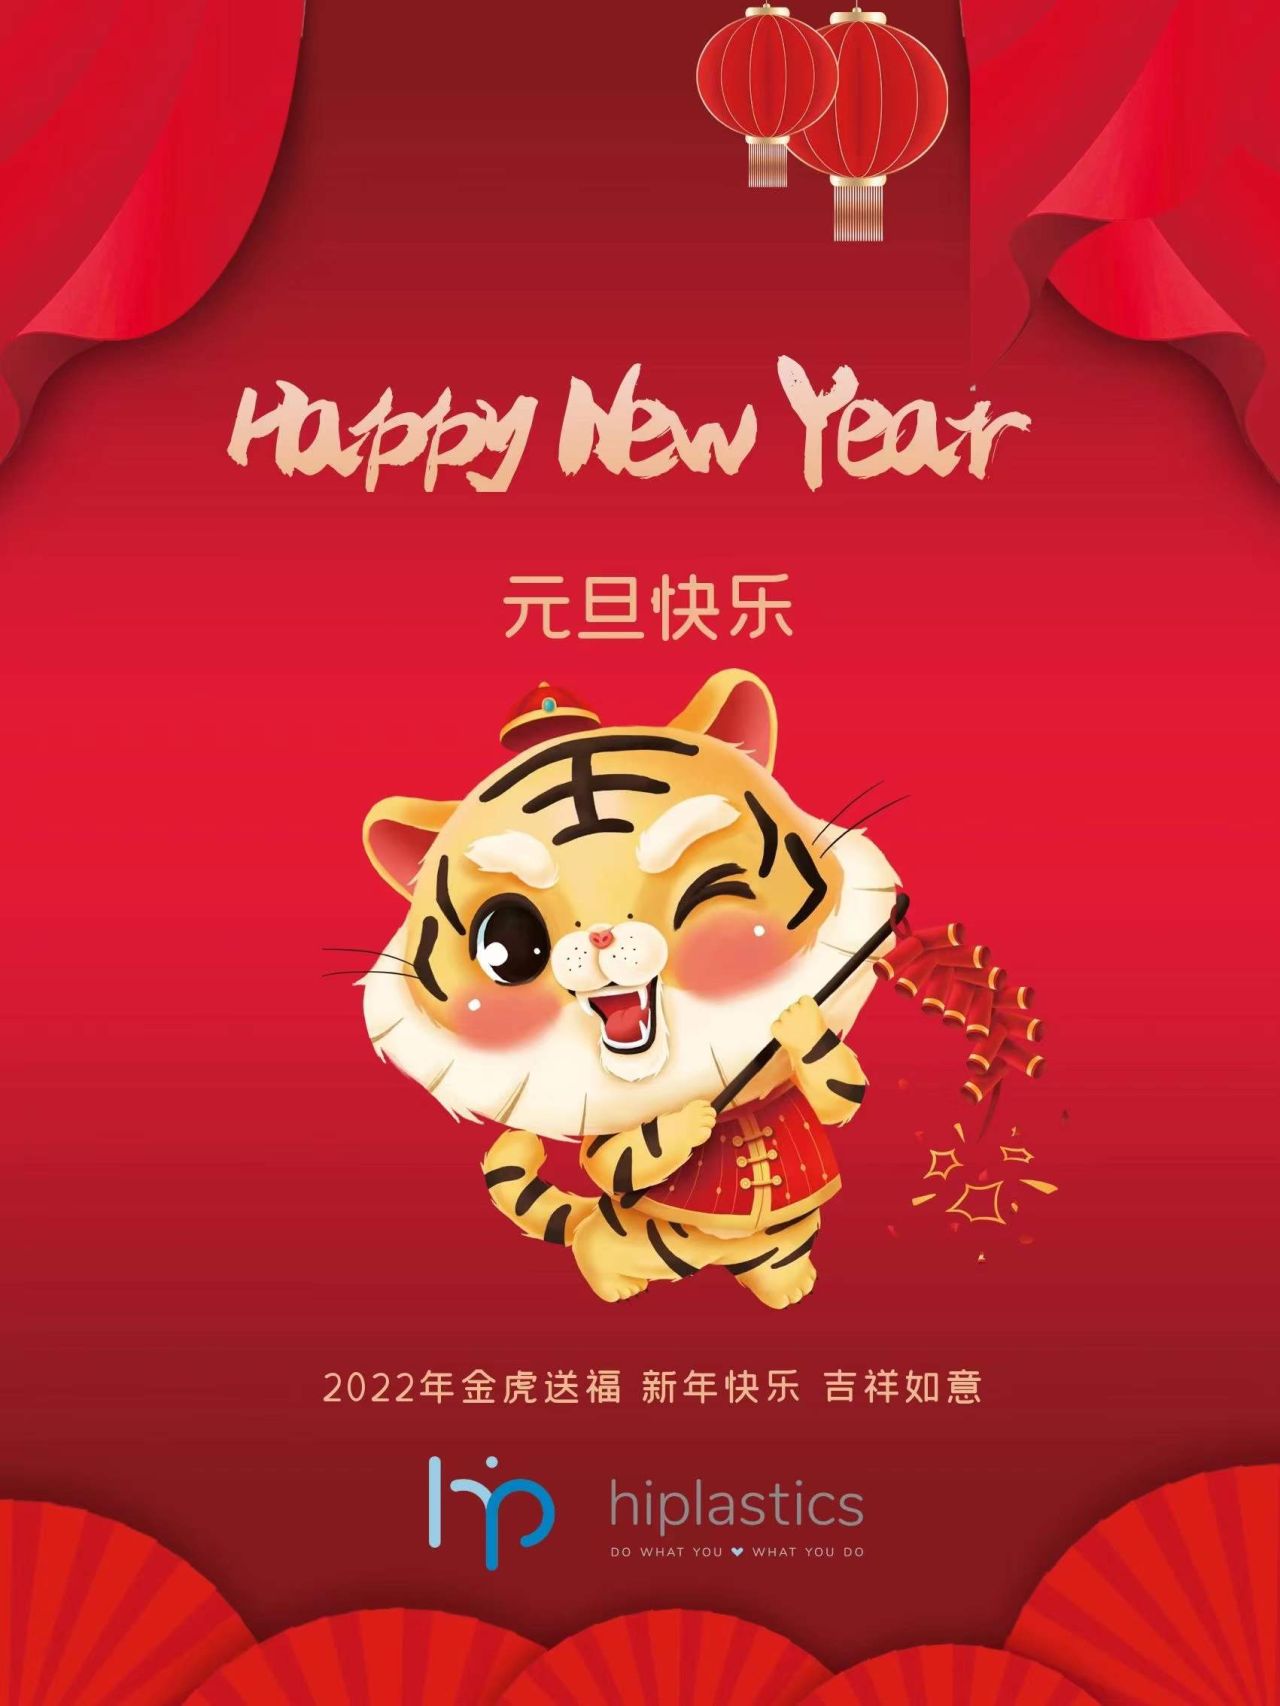 Hiplastics Team Wish You All A Happy New Year缩略图